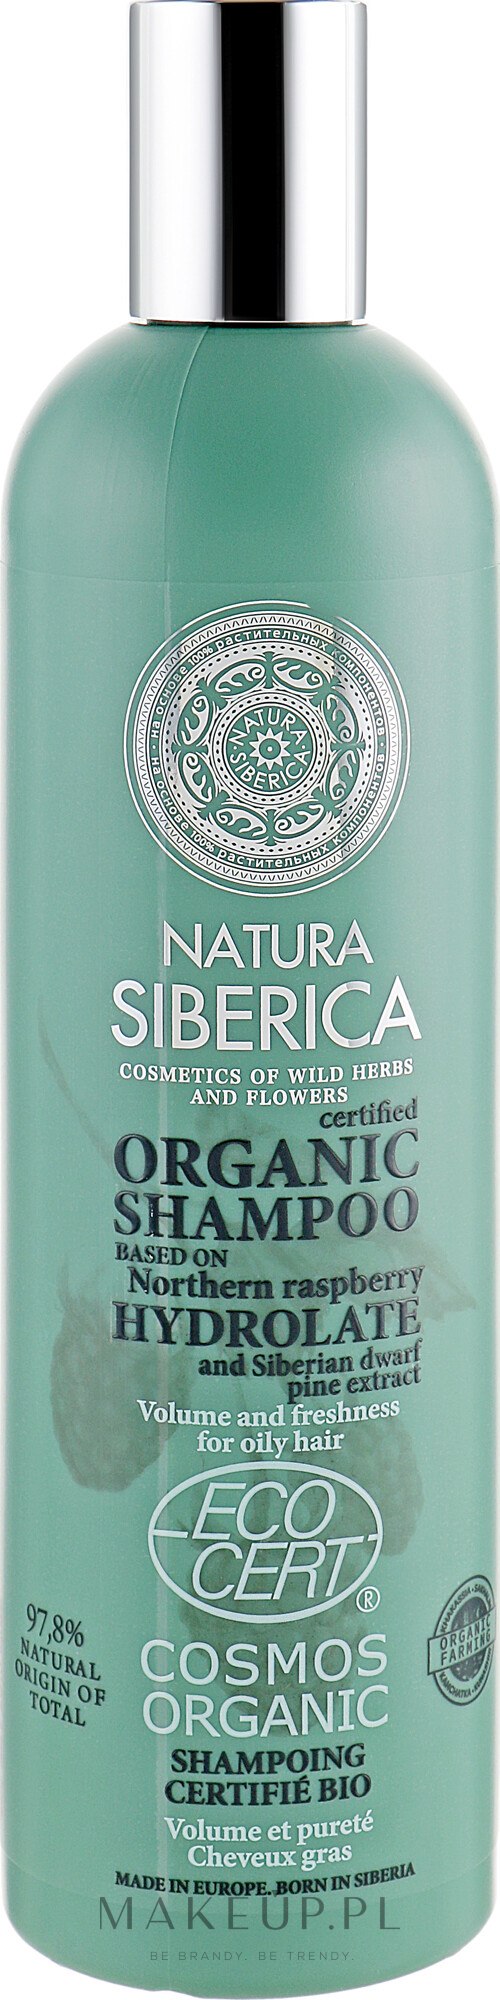 szampon siberica